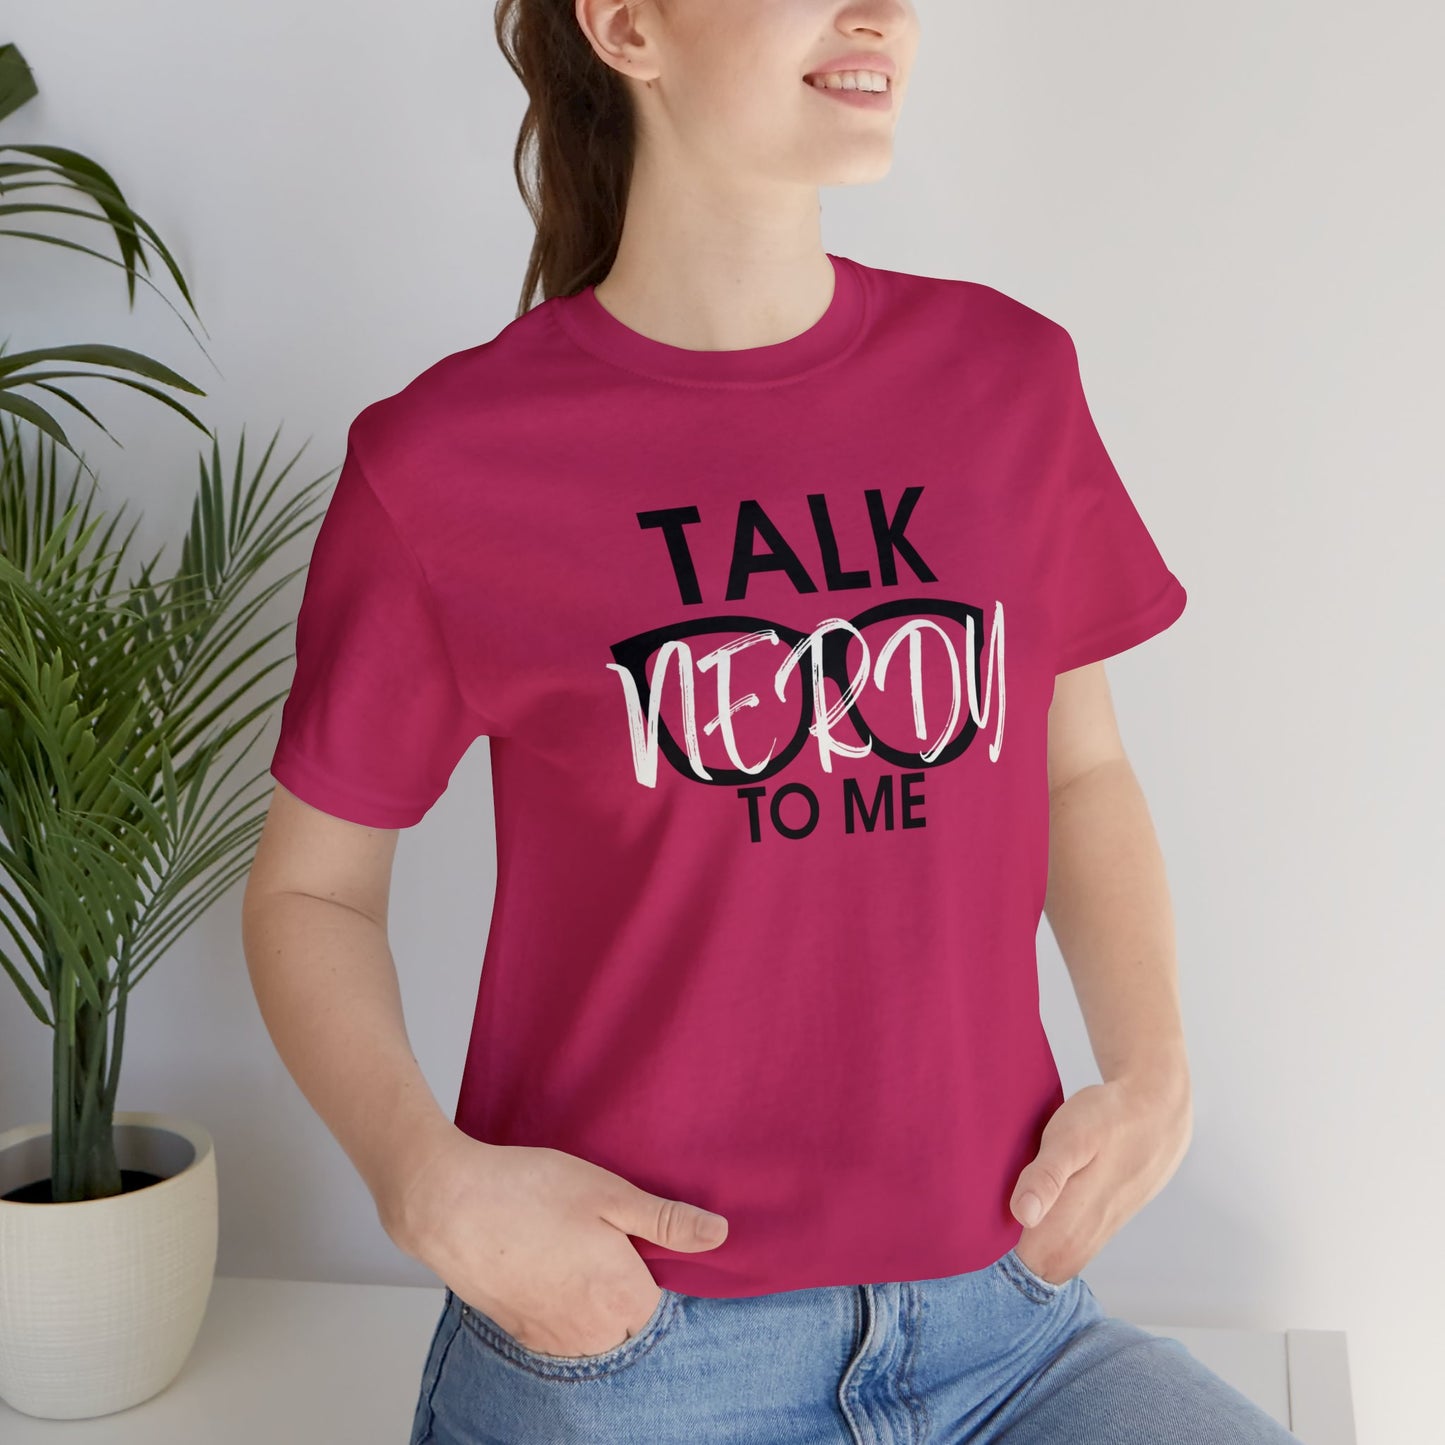 Talk Nerdy To Me - Nerdy T-Shirt